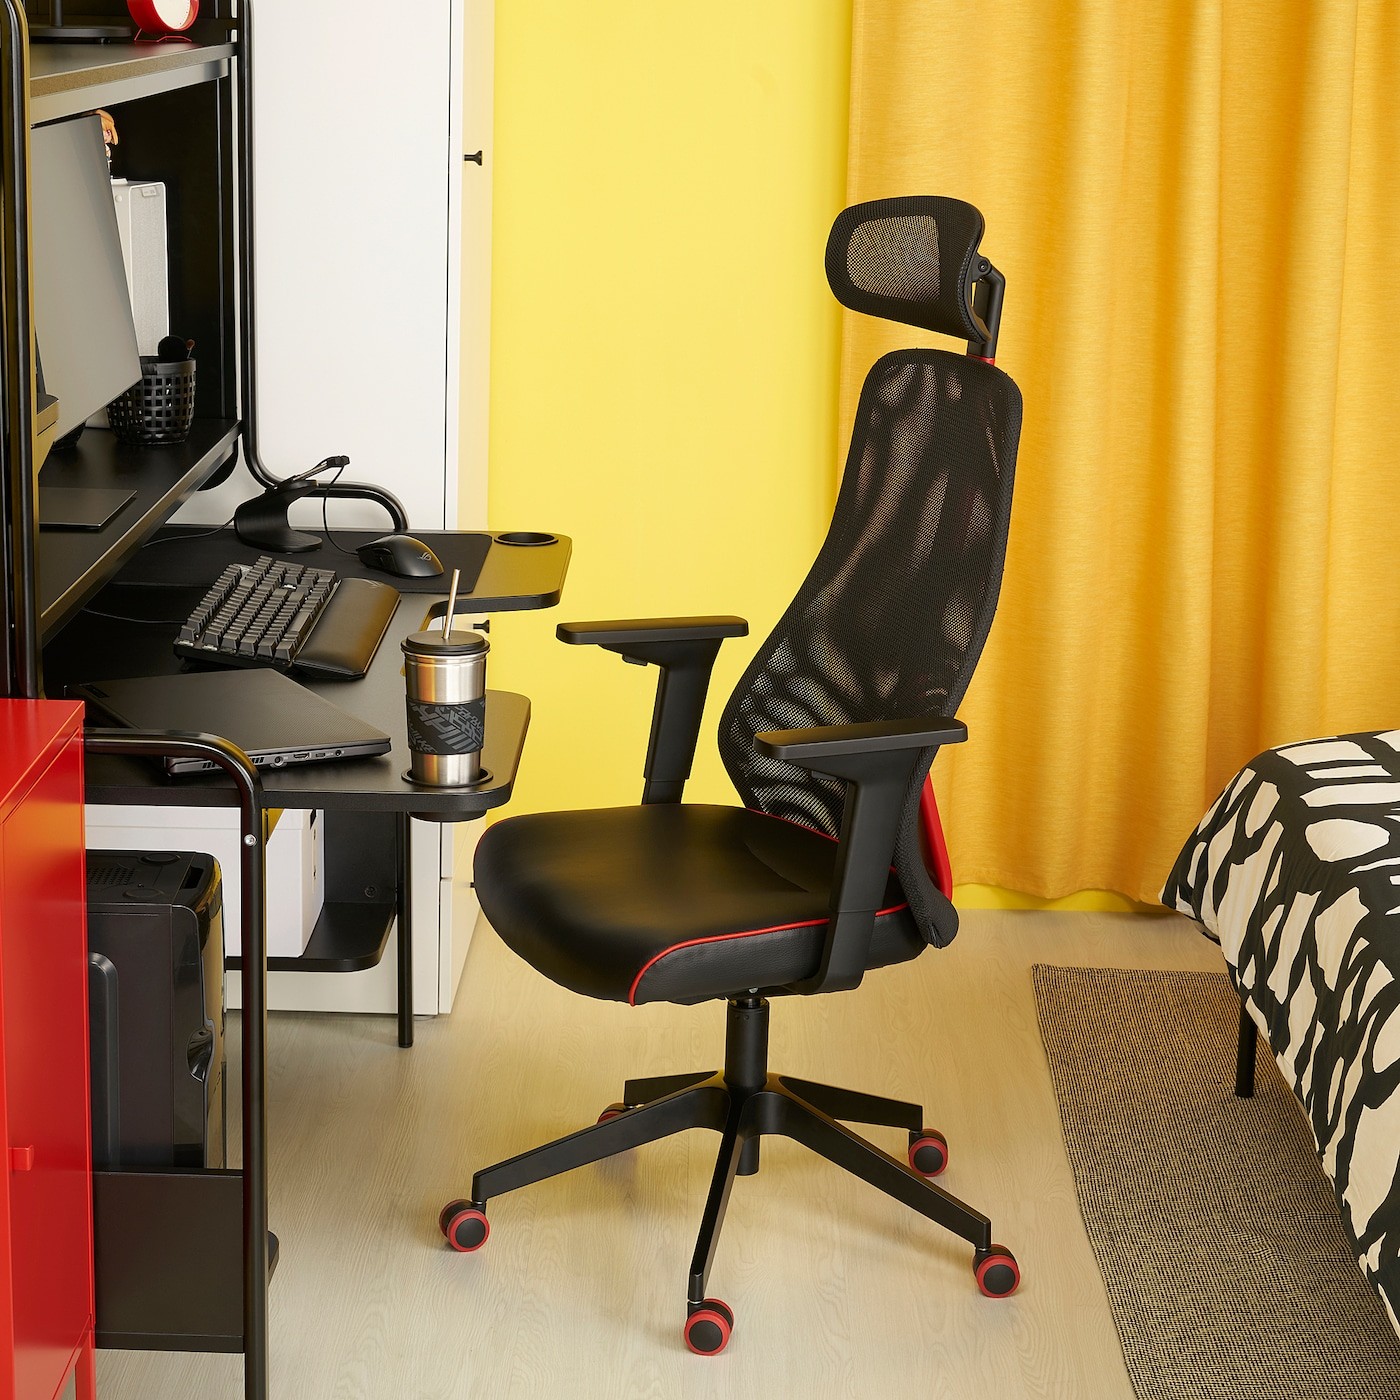 FREDDE / MATCHSPEL Gaming desk and chair